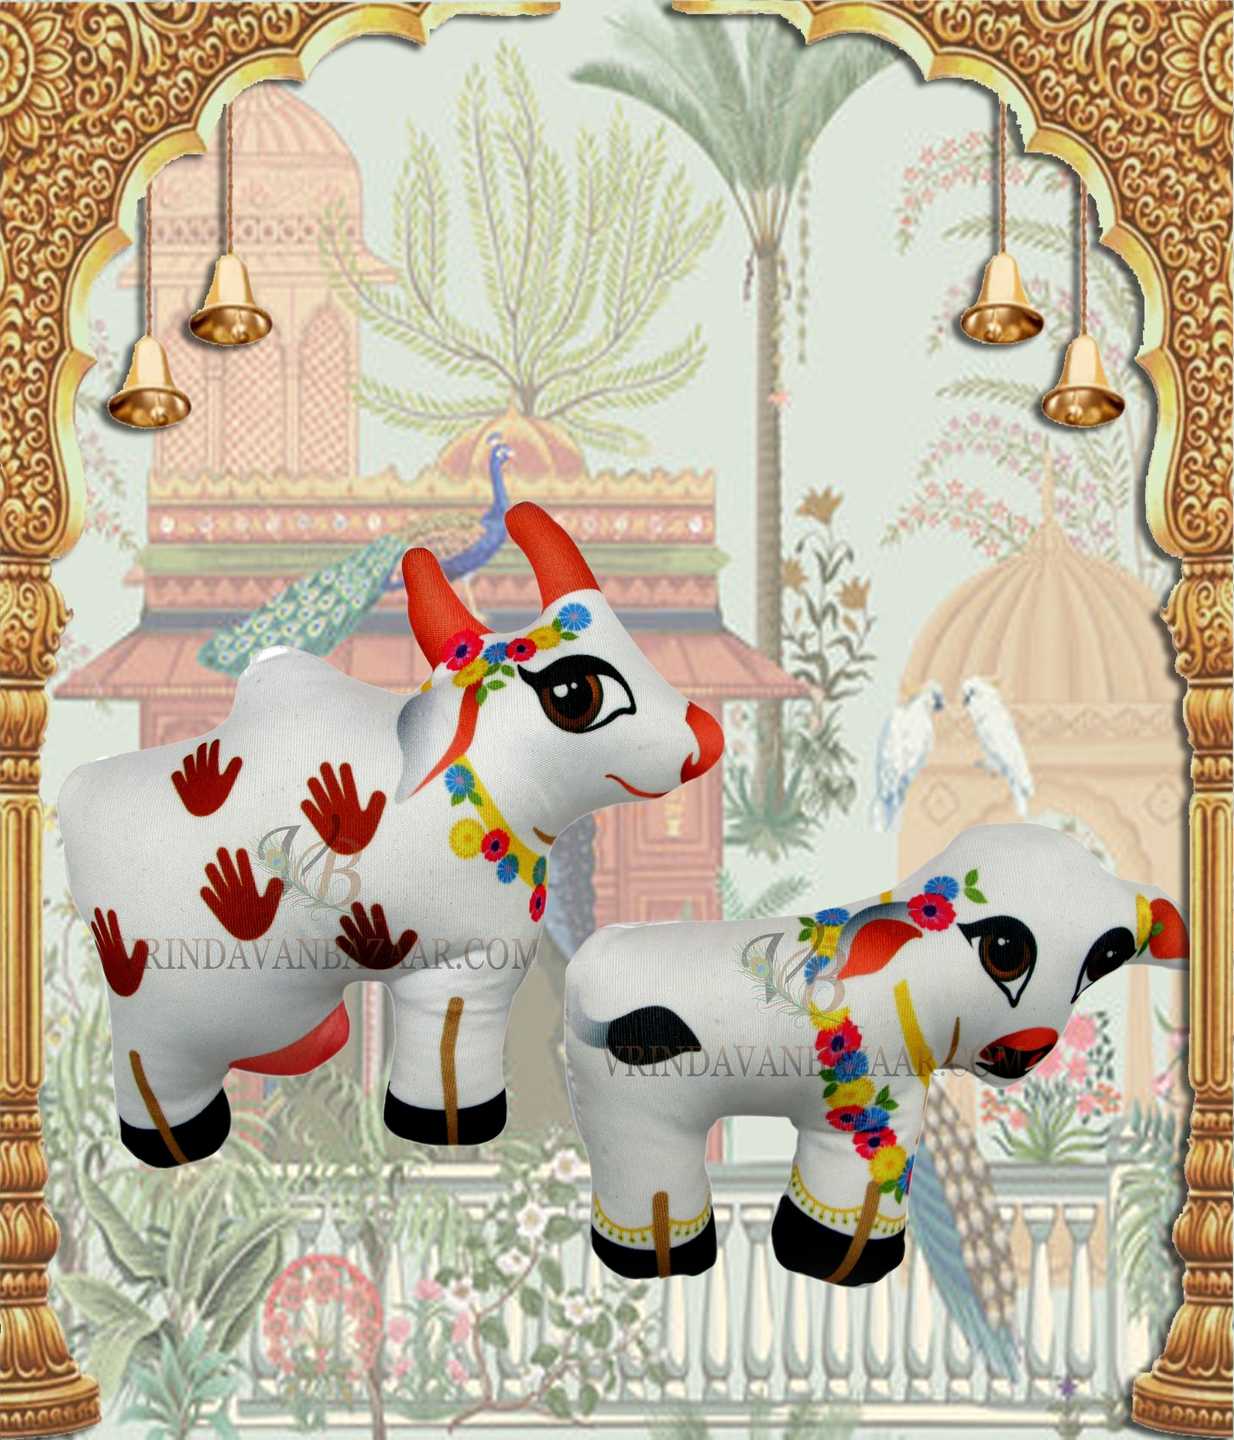 Krishna Leela- Krishna with Balaram, Madhu mangal, Vraja (monkey) and cow & calf soft toy